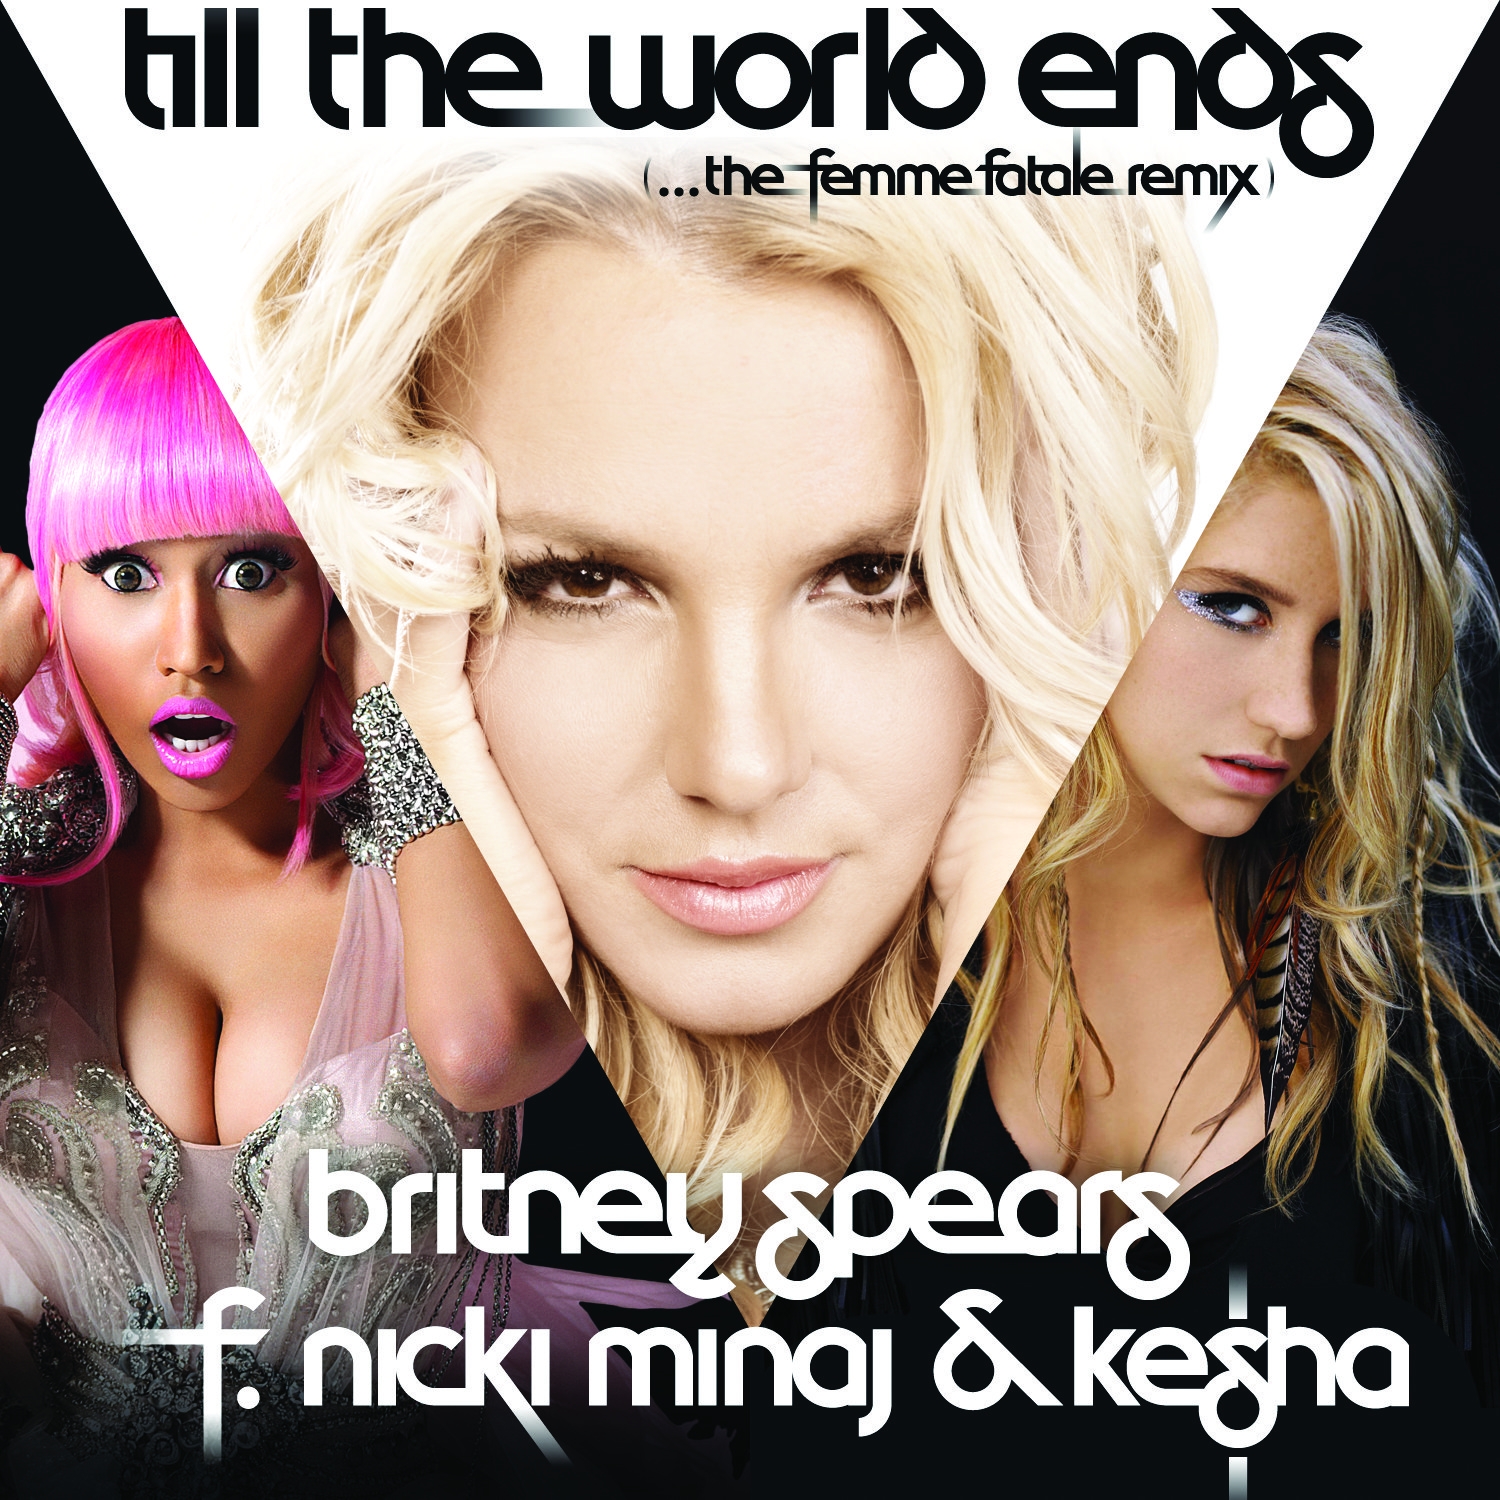 http://3.bp.blogspot.com/-ThPsBvJqoTg/TepArmUESRI/AAAAAAAAAYg/iBeYUodkVJM/s1600/Britney-Spears-Till-The-World-Ends-The-Femme-Fatale-Remix-feat.-Nicki-Minaj-Keha-Official-Single-Cover.jpg